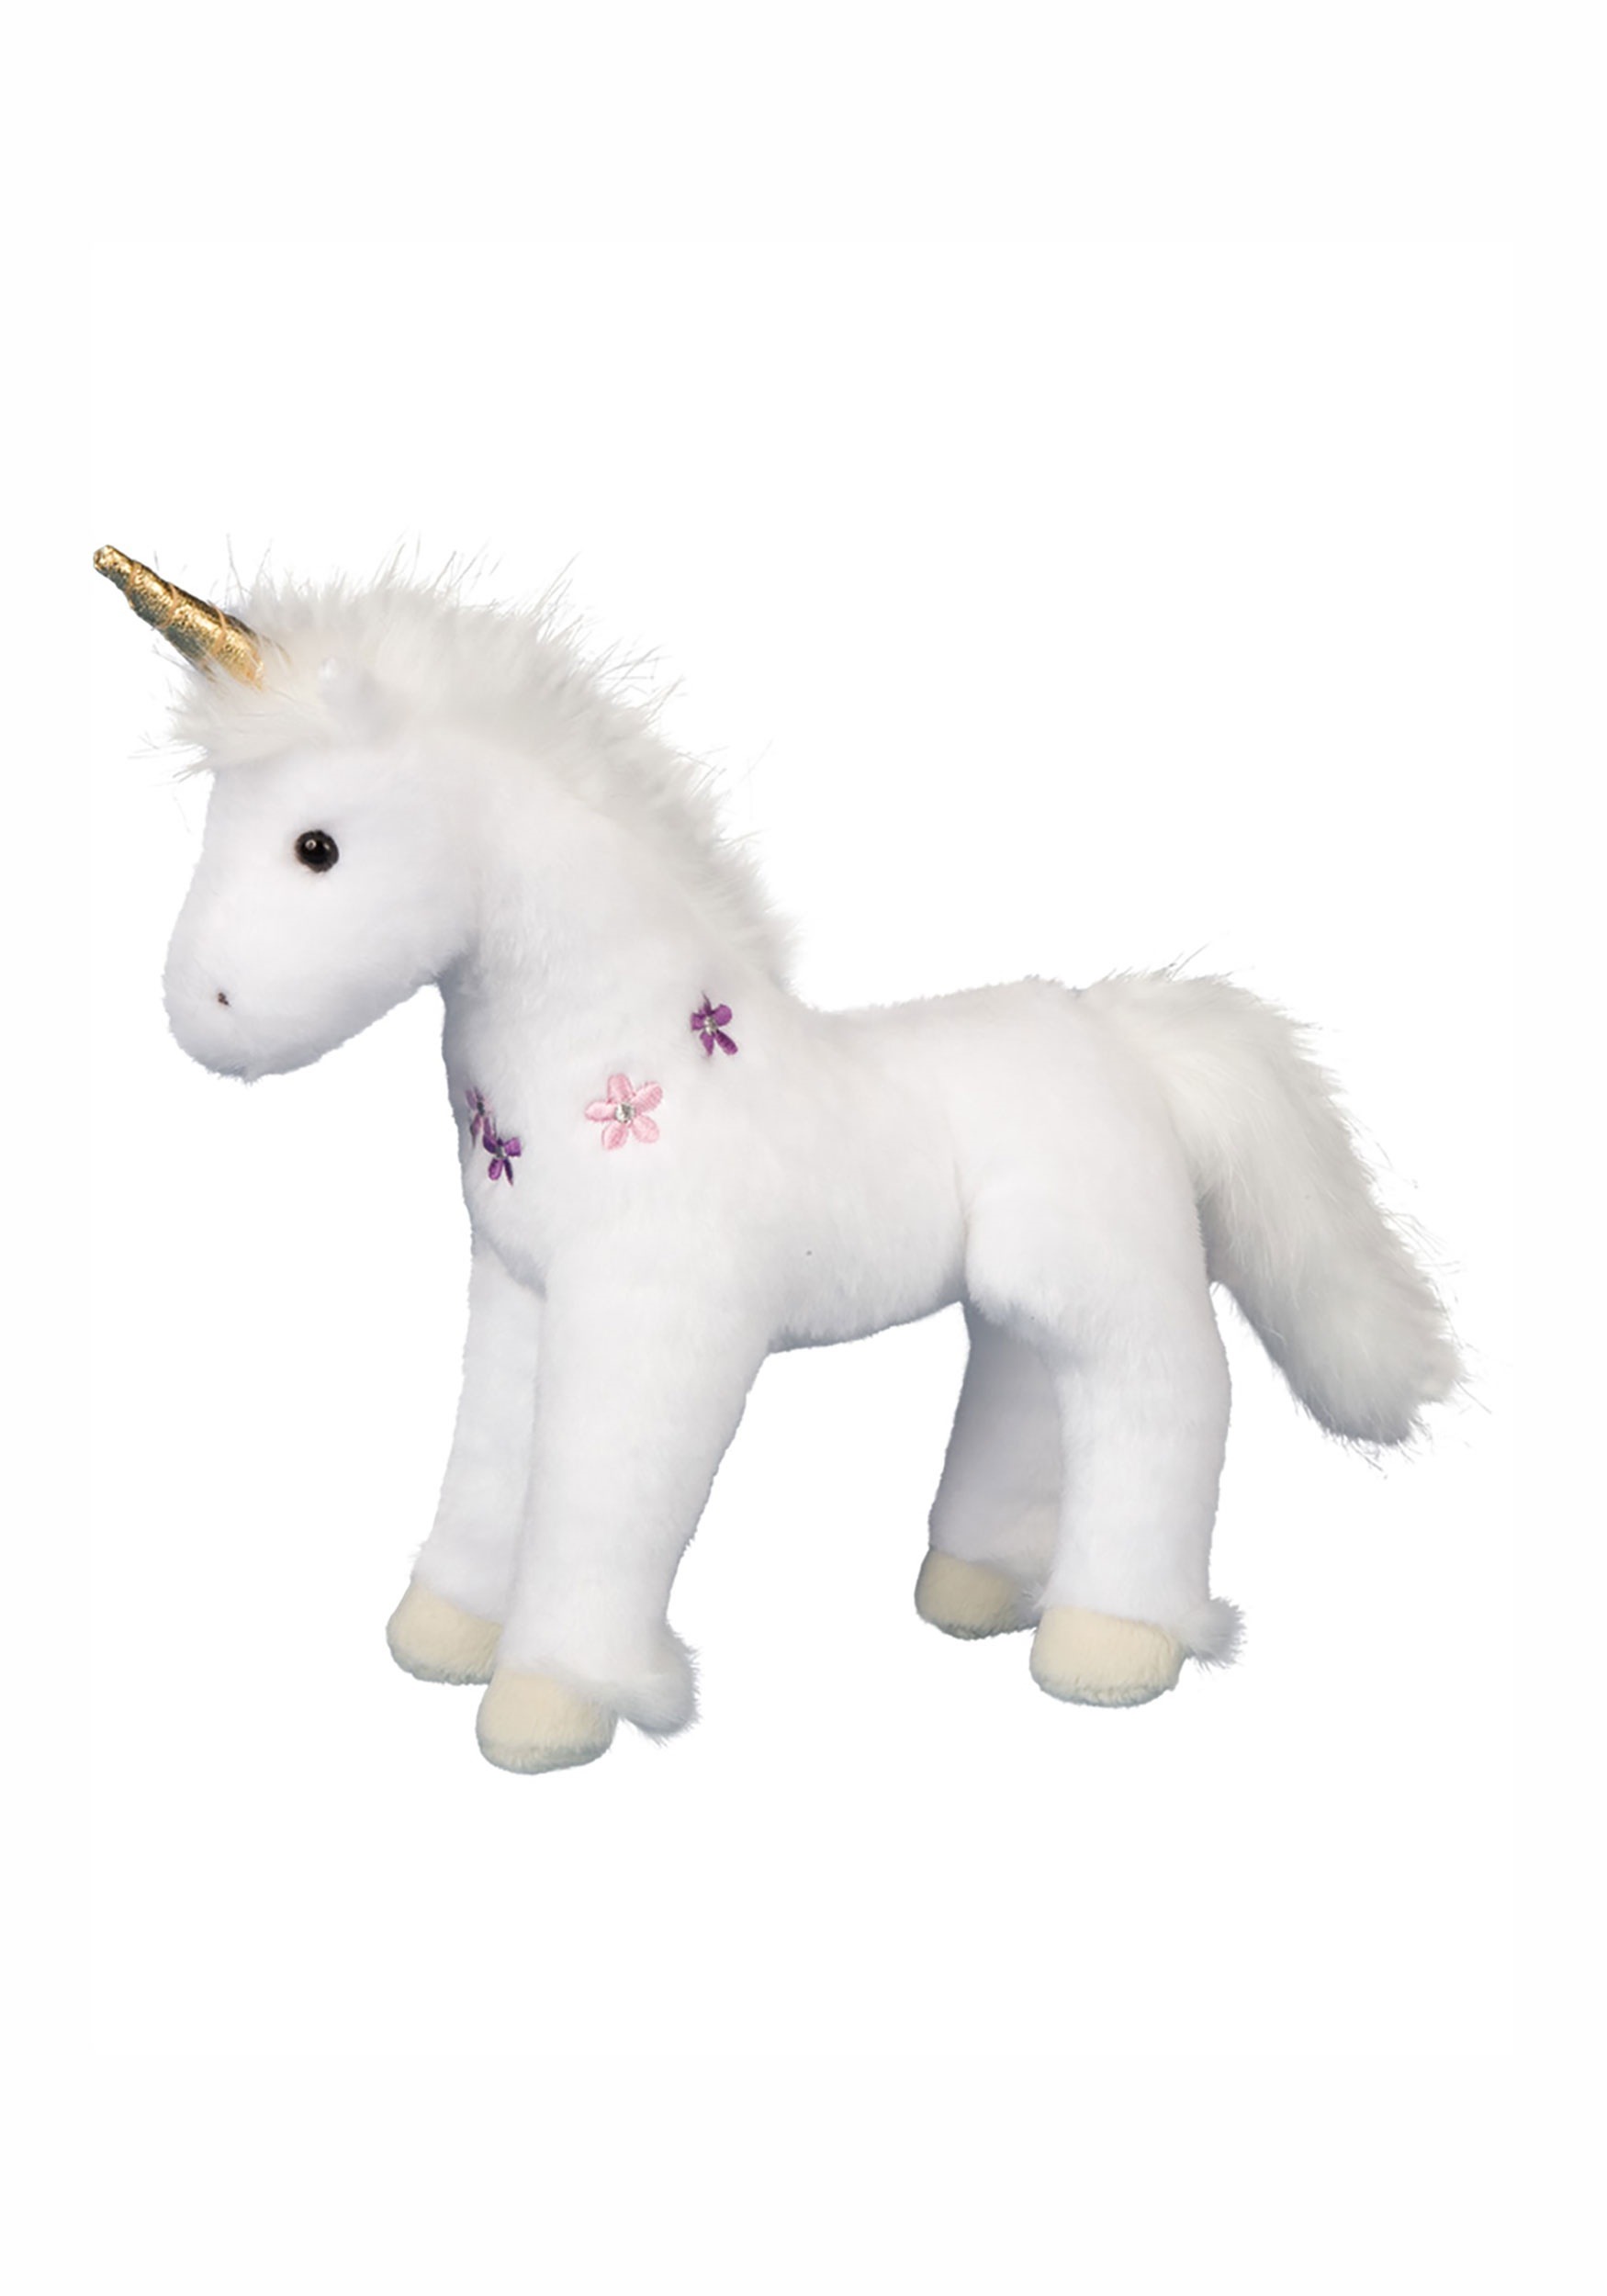 deadpool unicorn plush